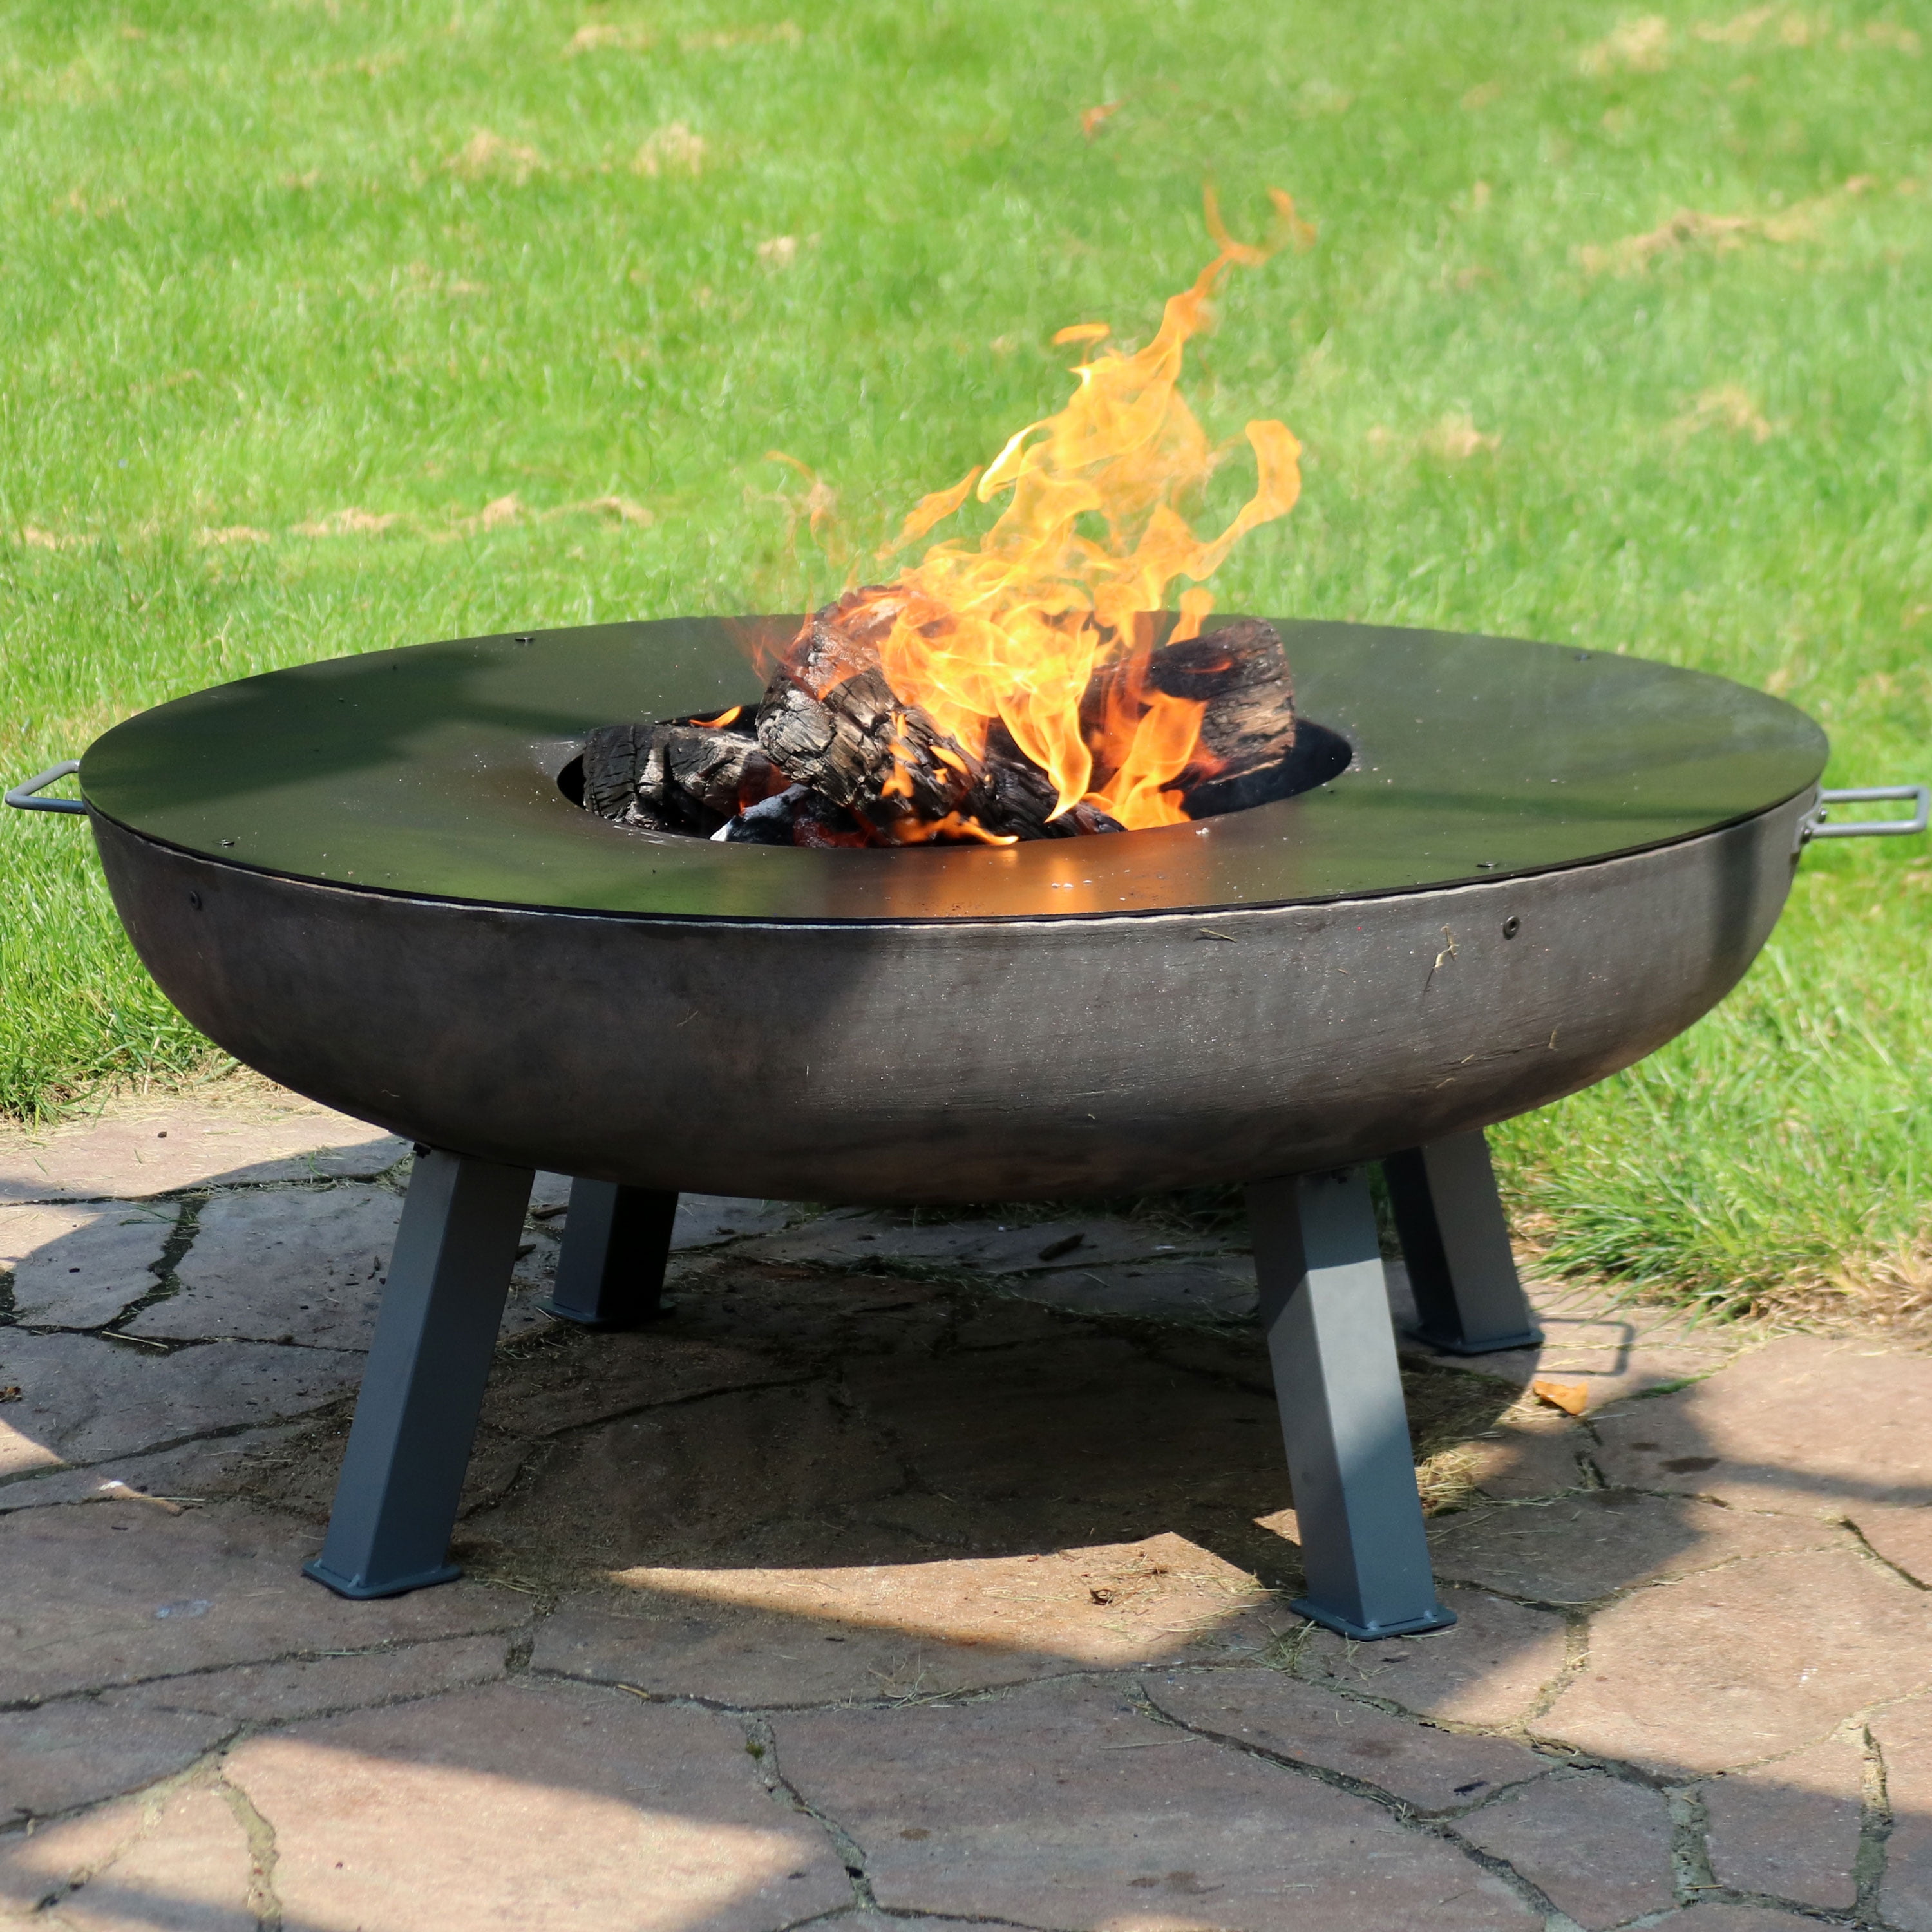 Sunnydaze Large Outdoor Fire Pit Bowl, Metal Fire Pit Bowl Insert